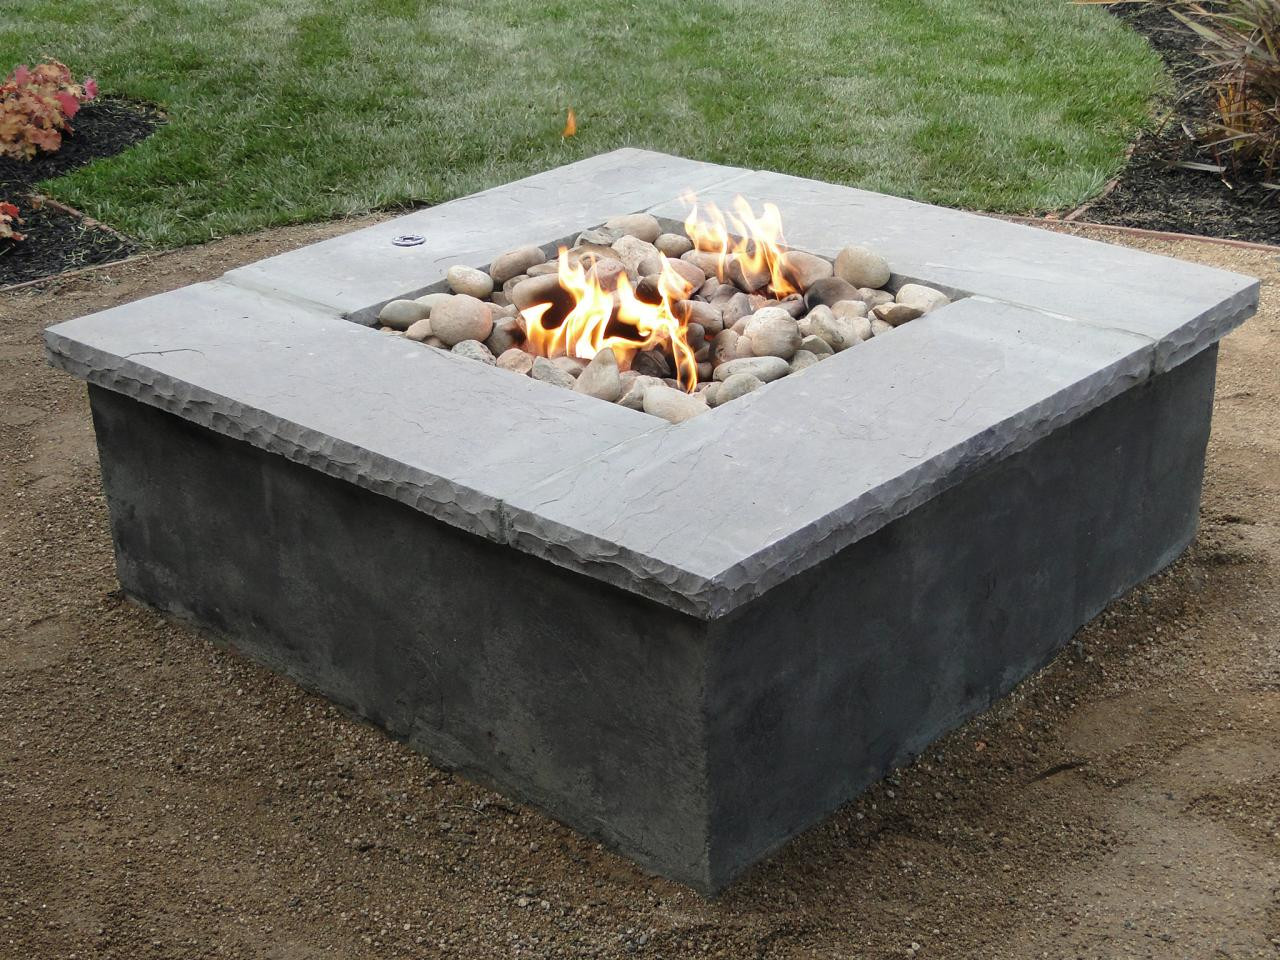 Best ideas about DIY Concrete Fire Pit
. Save or Pin DIY Concrete Propane Fire Pit Now.